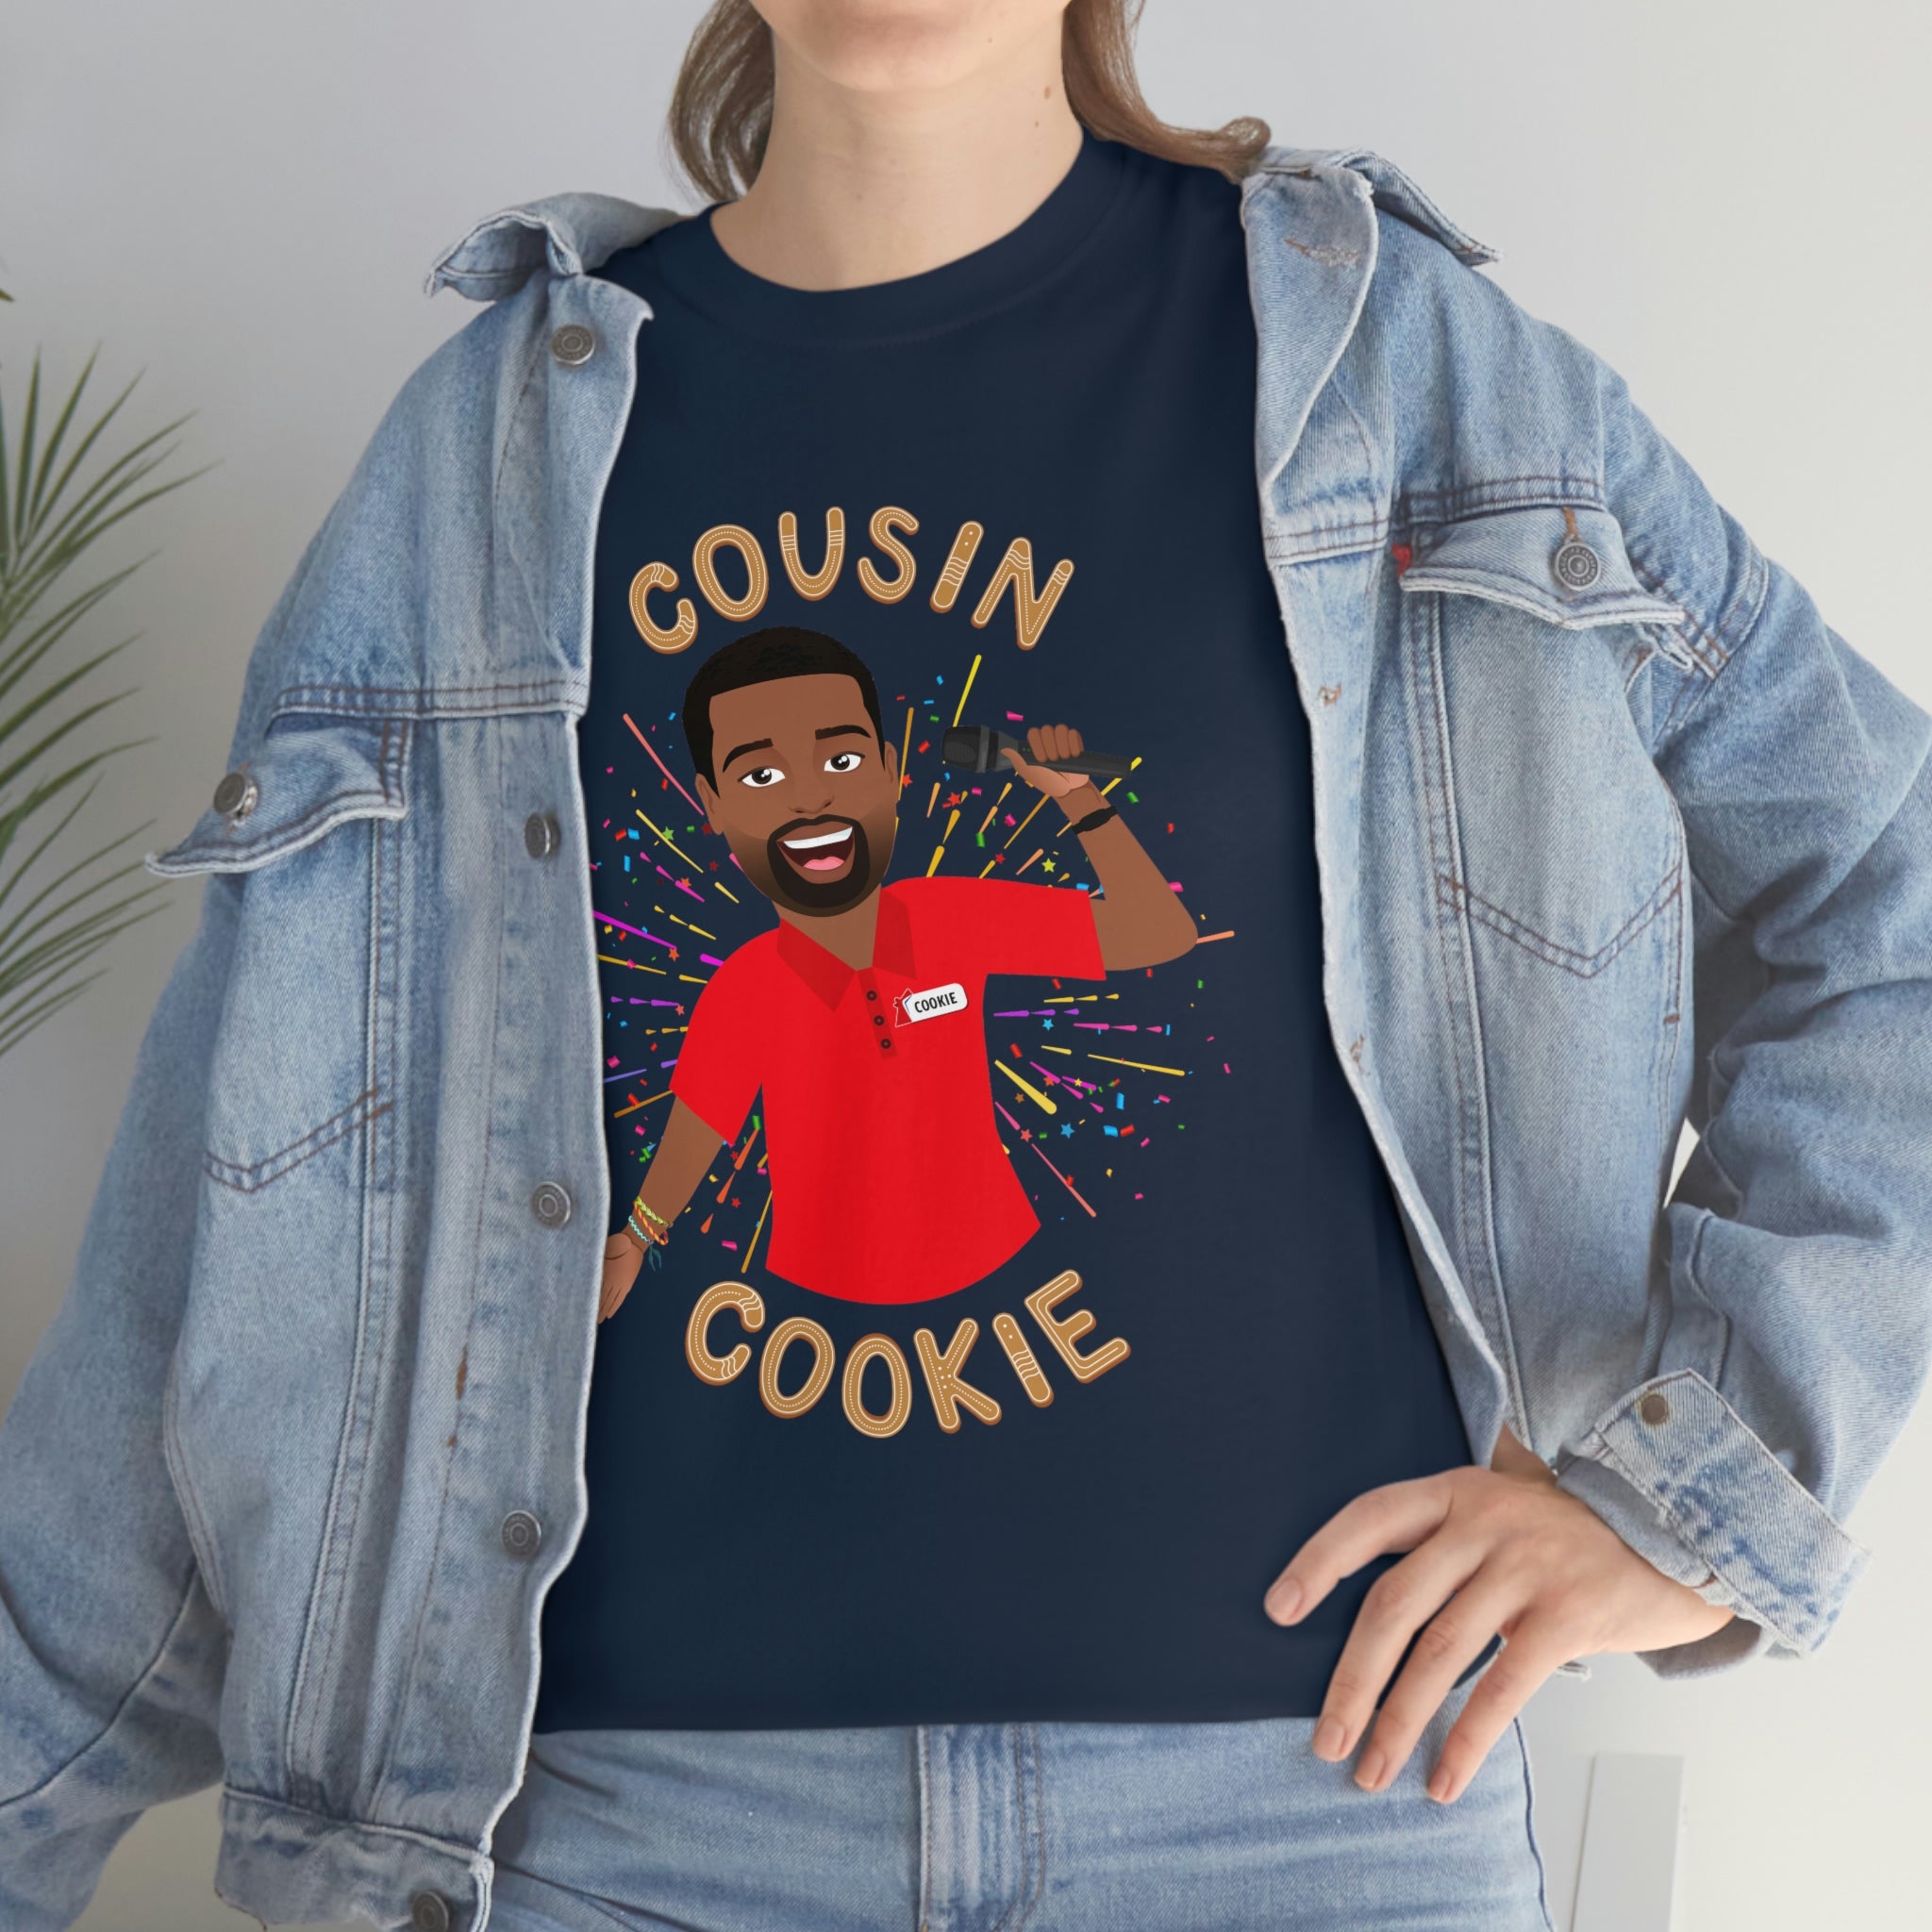 Gildan Tee - The Cousin Cookie